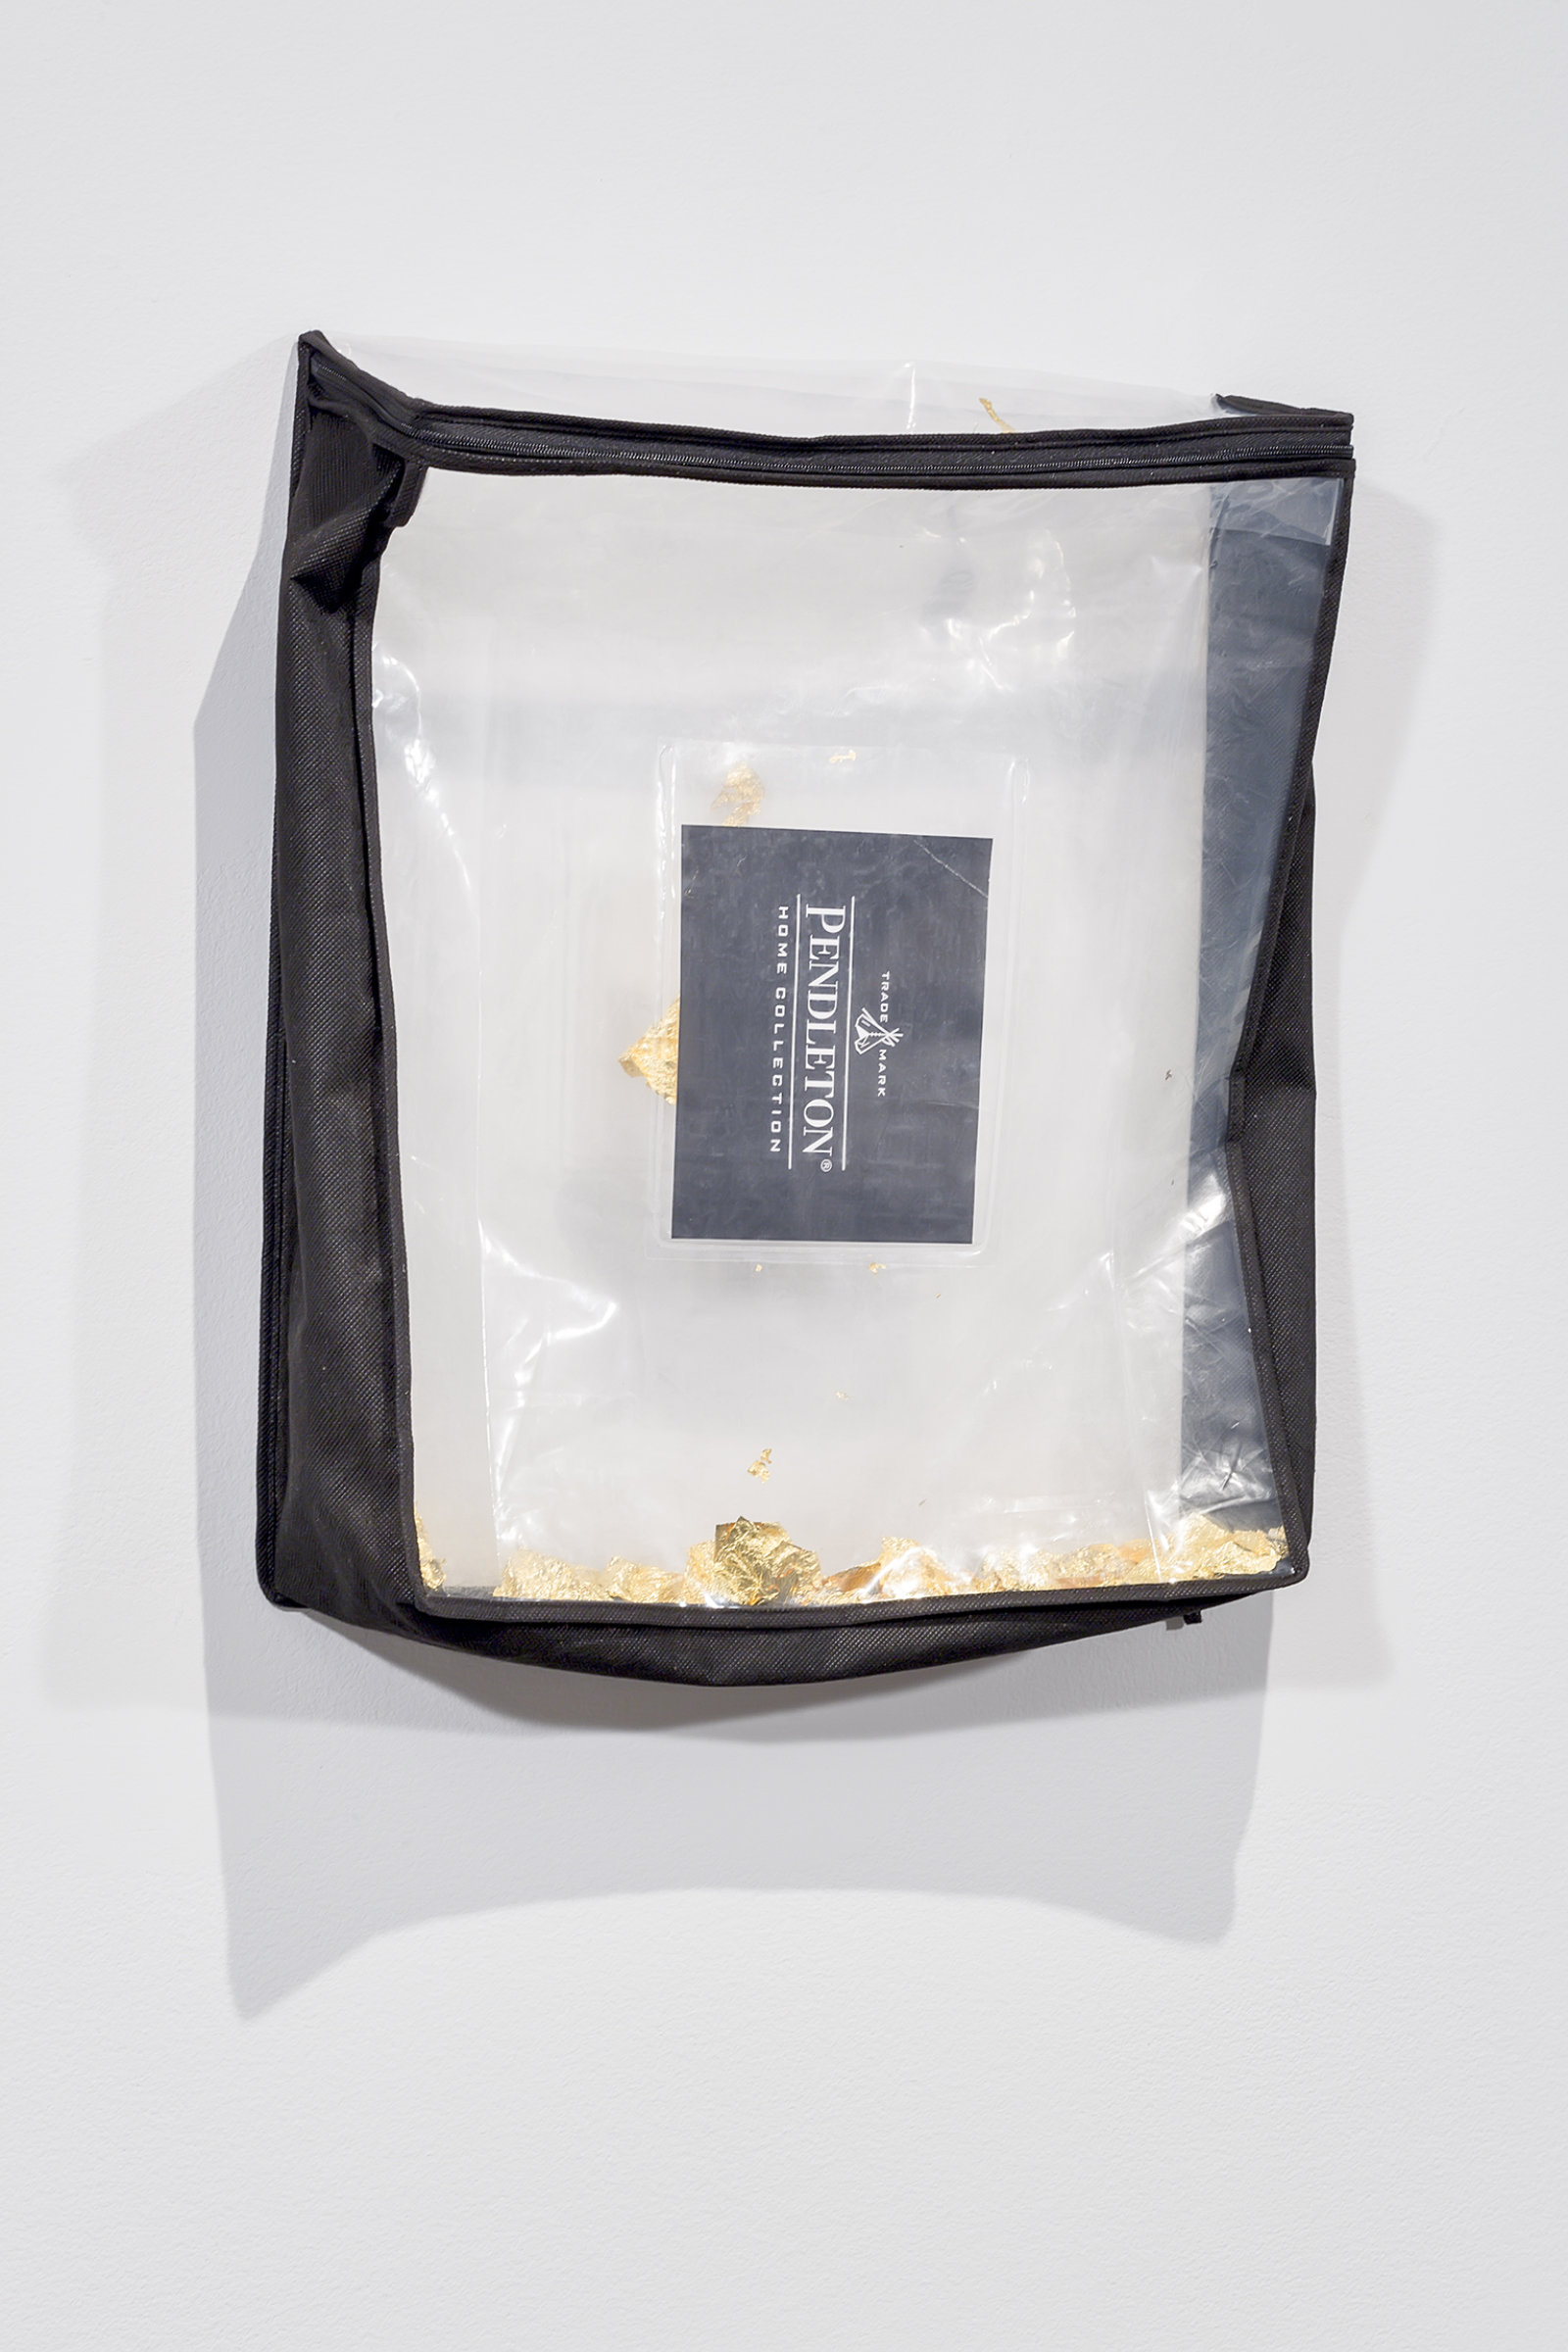 Duane Linklater, Trademark, 2016, gold leaf, plastic bag, 19 x 16 x 4 in. (48 x 40 x 9 cm)